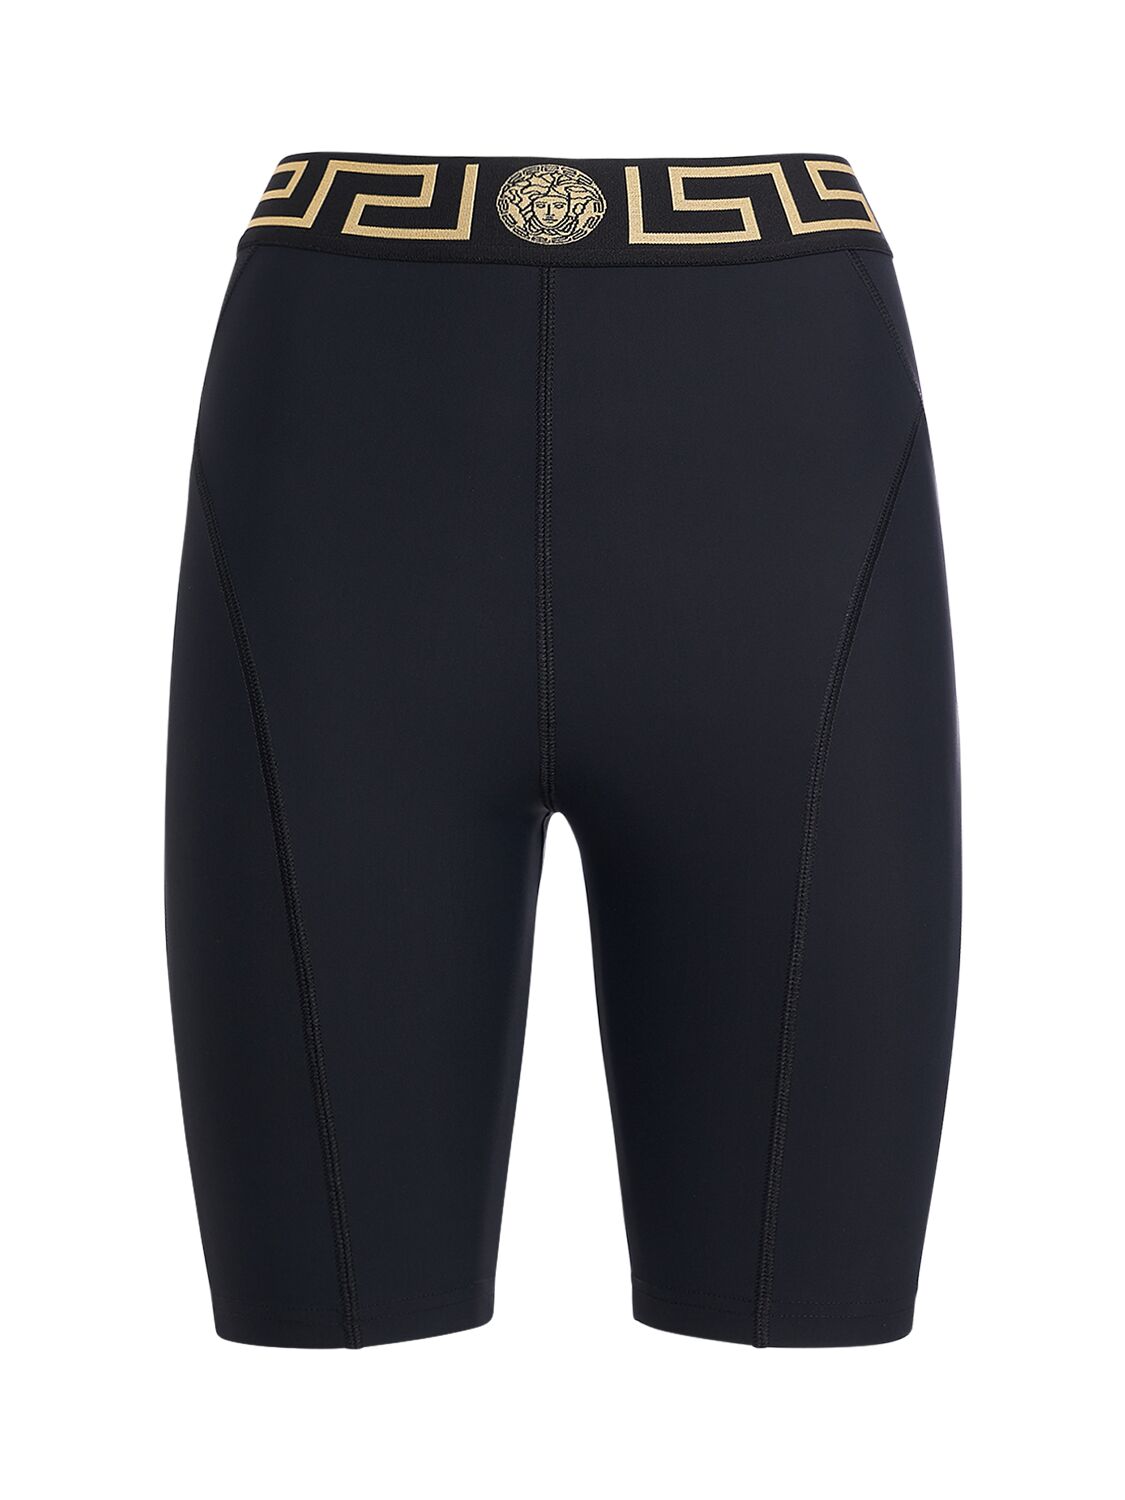 Versace Greca Lycra Bike Shorts In Black